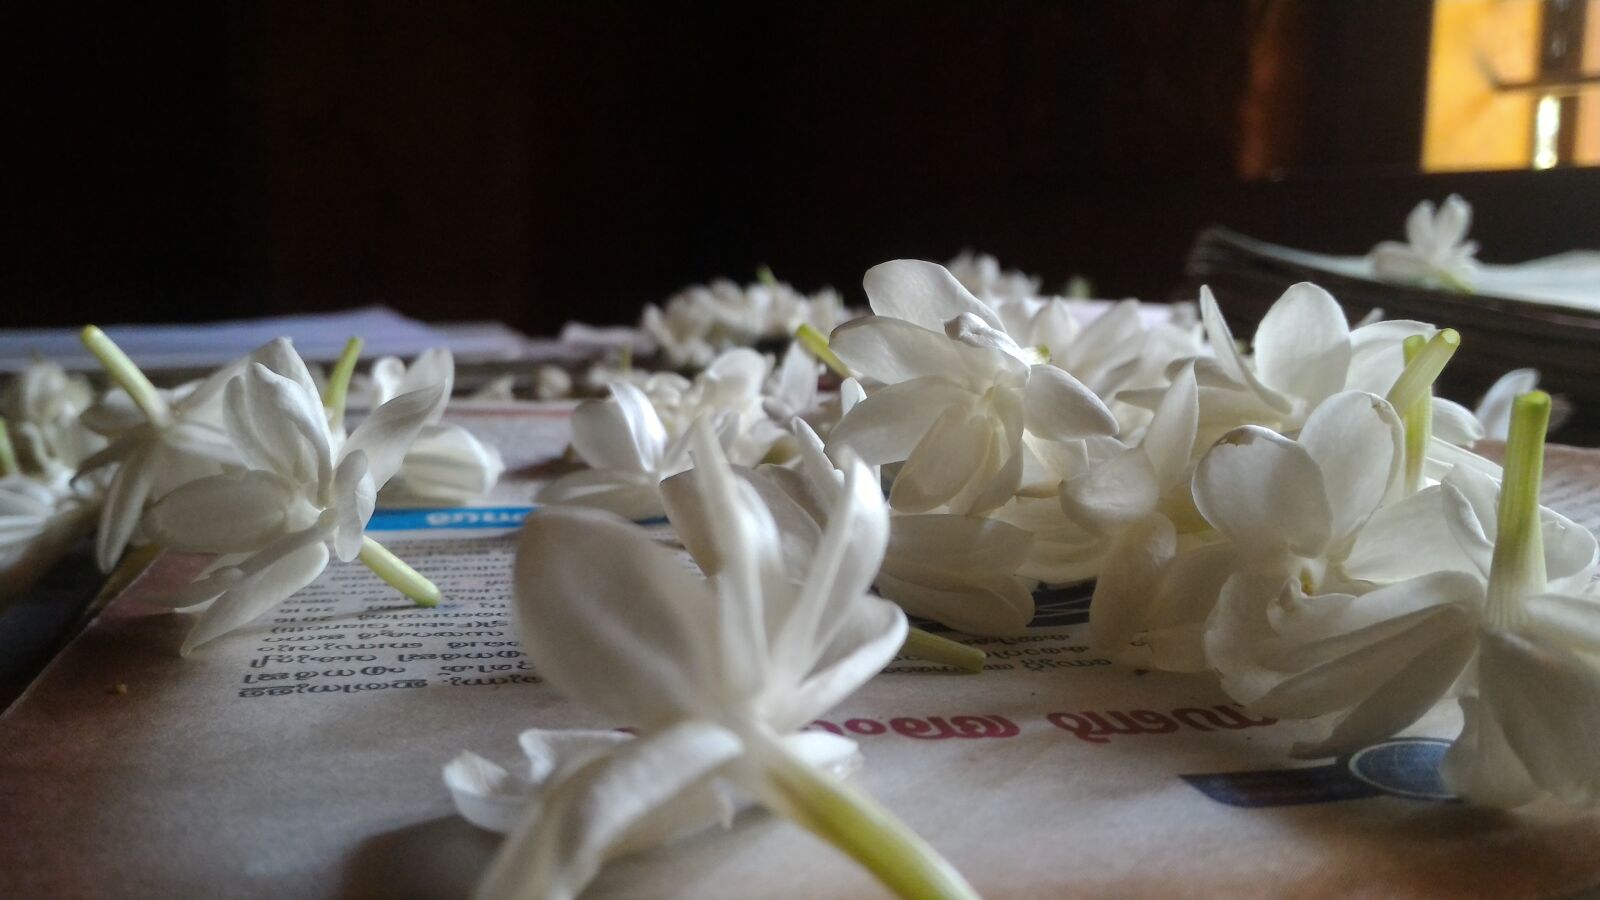 ASUS Z00AD sample photo. Jasmine flowers, nidhin chundambatta photography